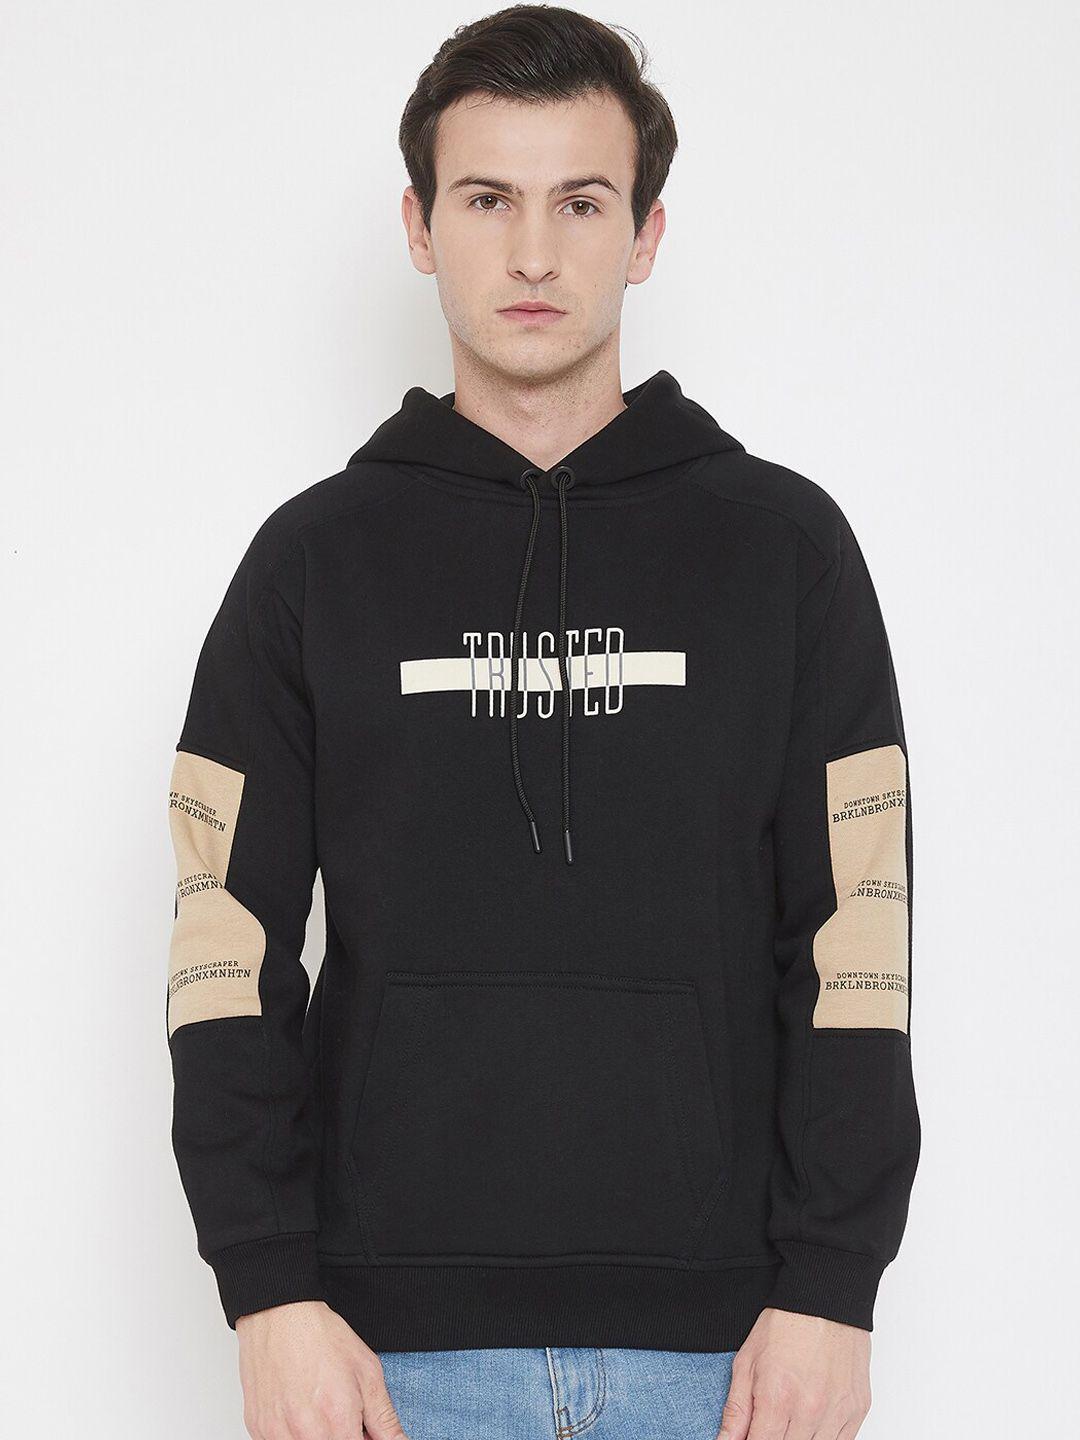 qubic men black & off-white printed sweatshirt